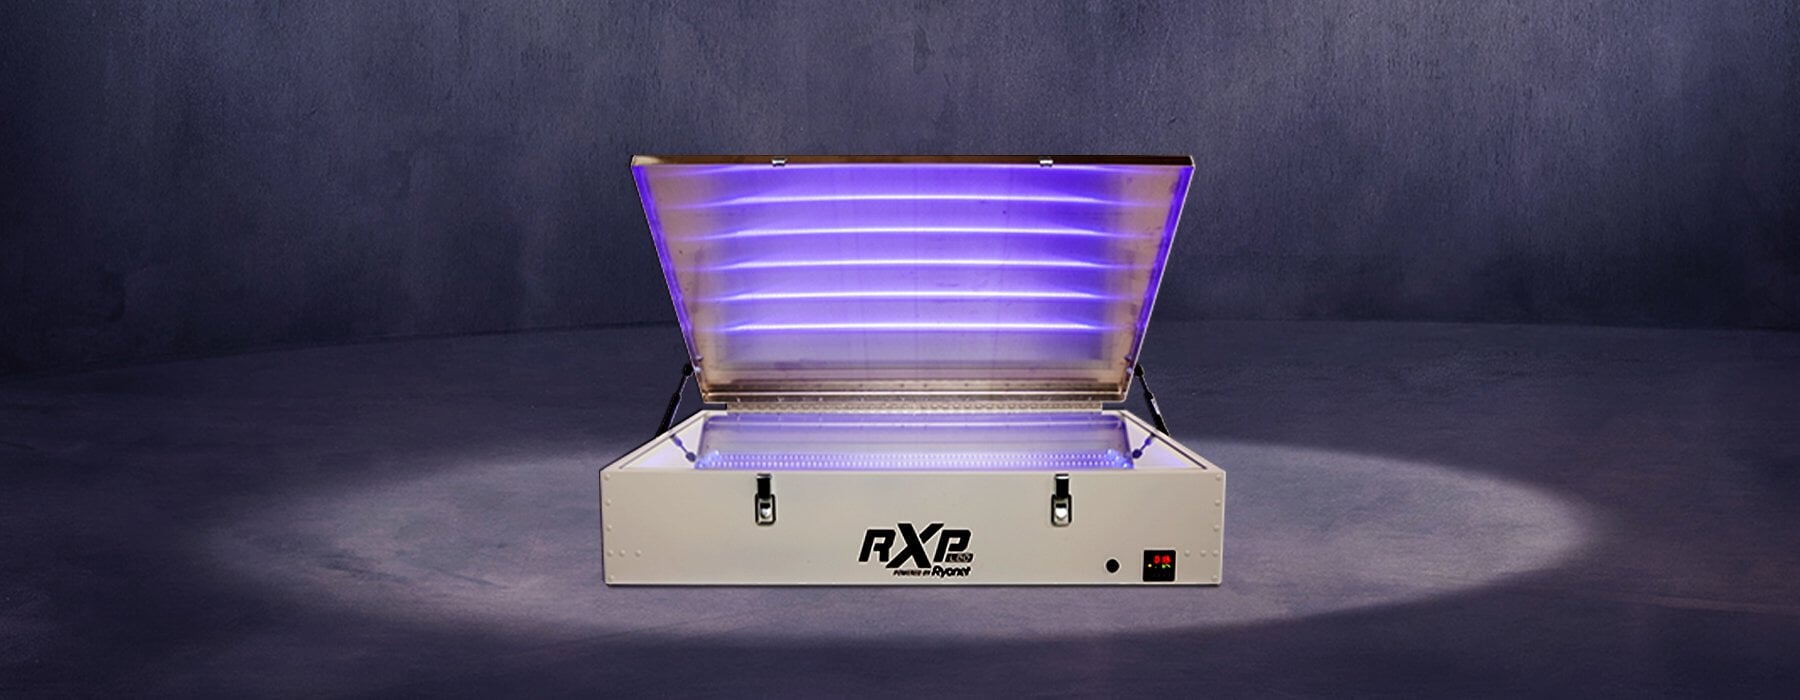 LED UV exposure box 